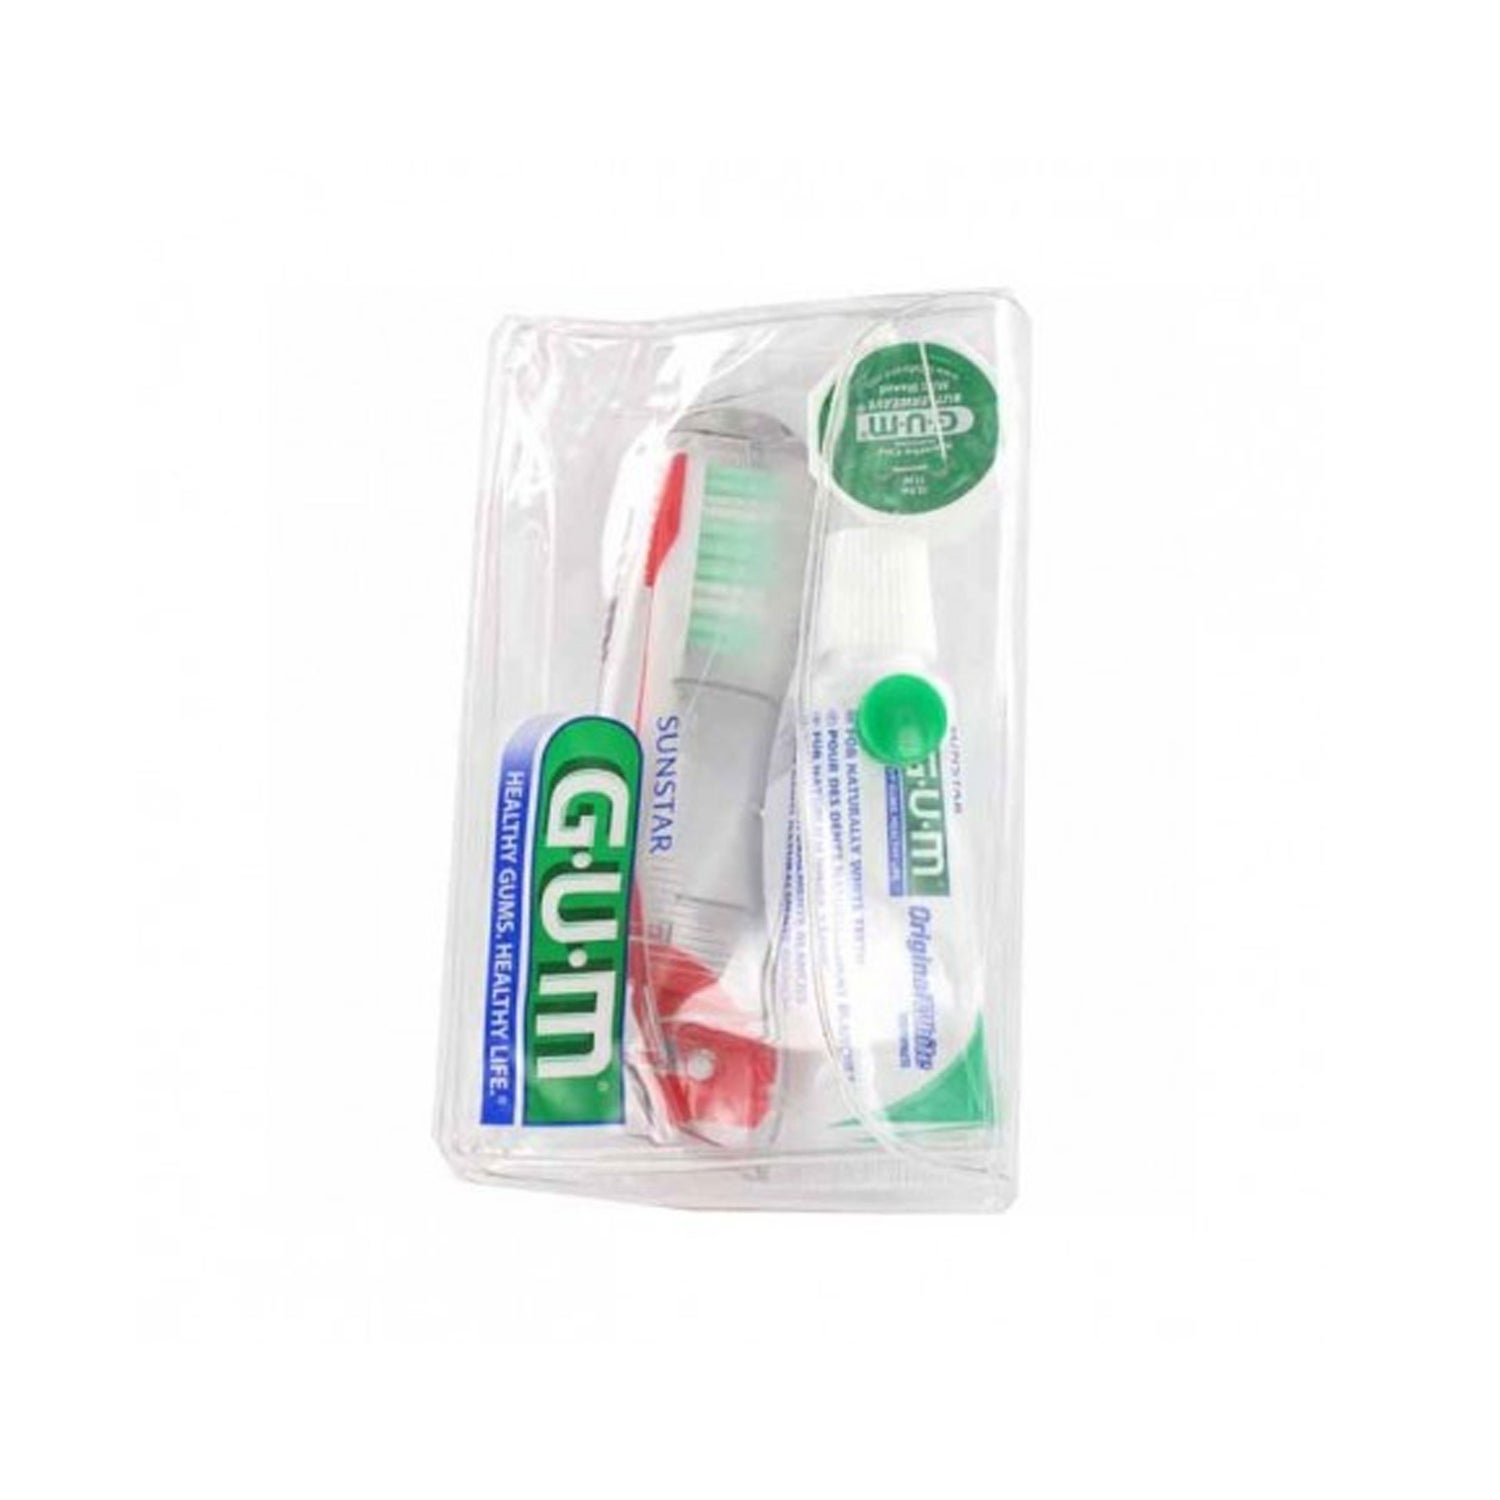 Comprar Kit Dental Gum Anticaries Viaje 3 unidades